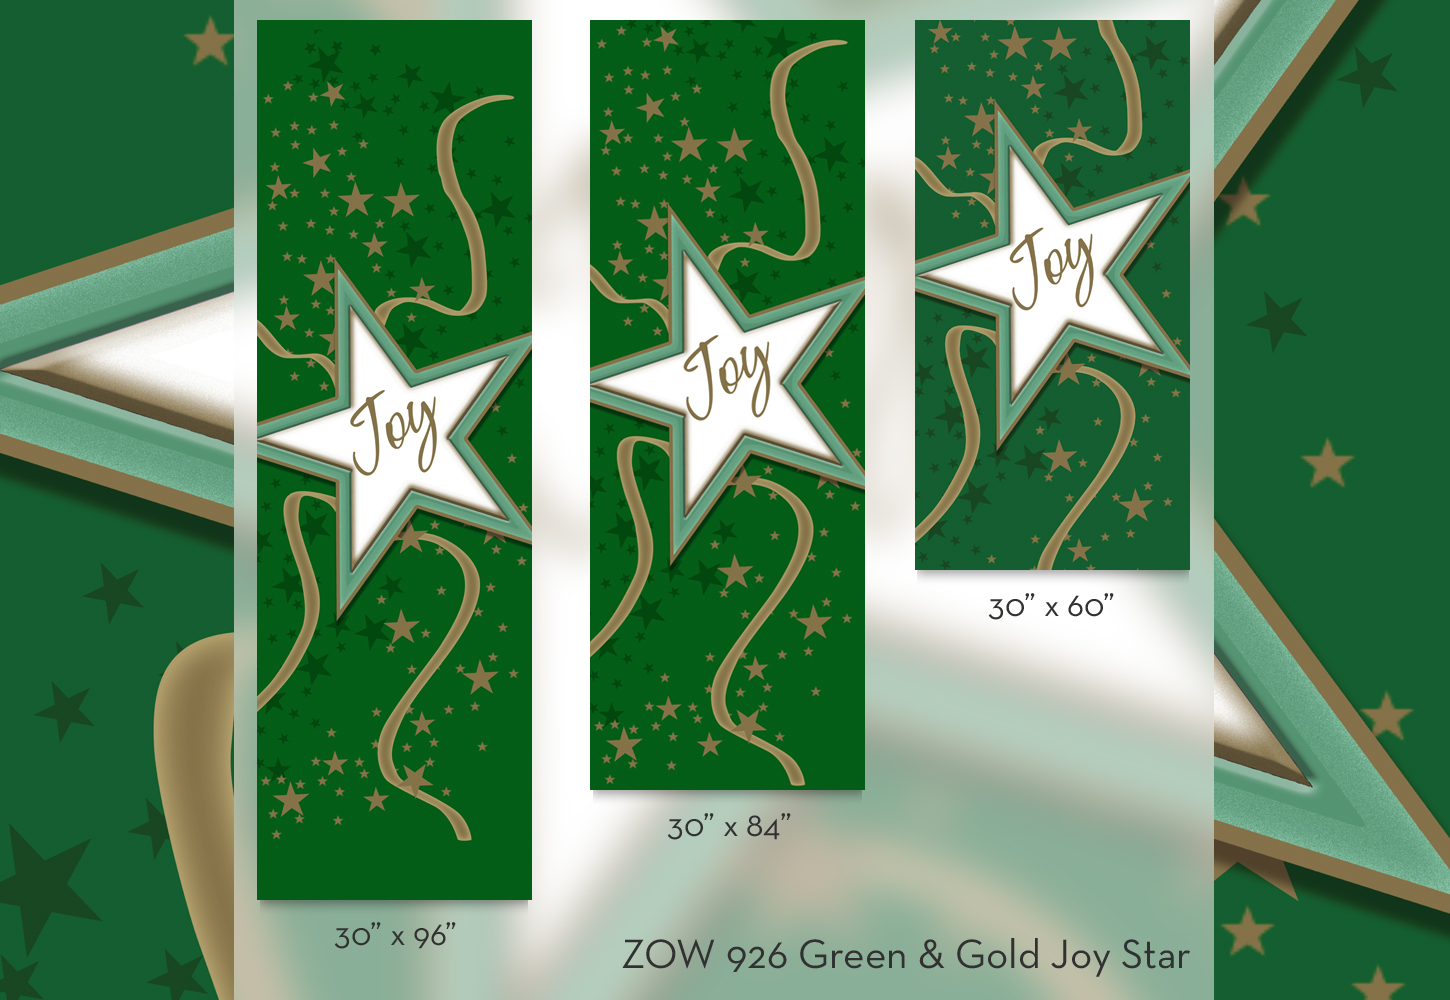 ZOW 926 Green & Gold Joy Star